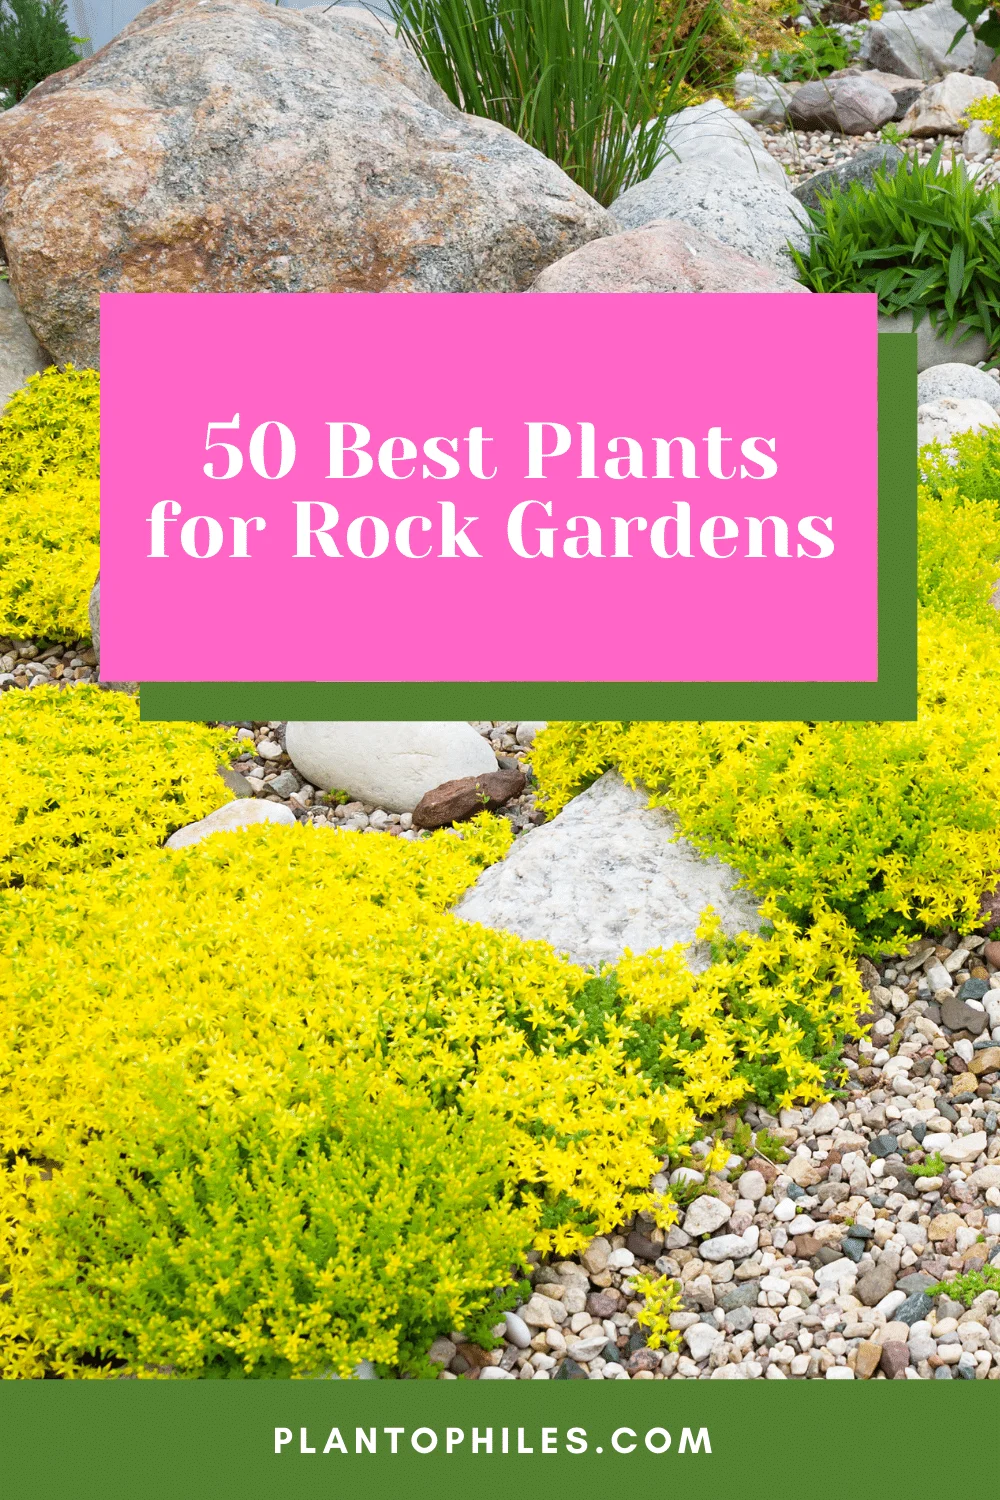 50 Best Plants for Rock Gardens